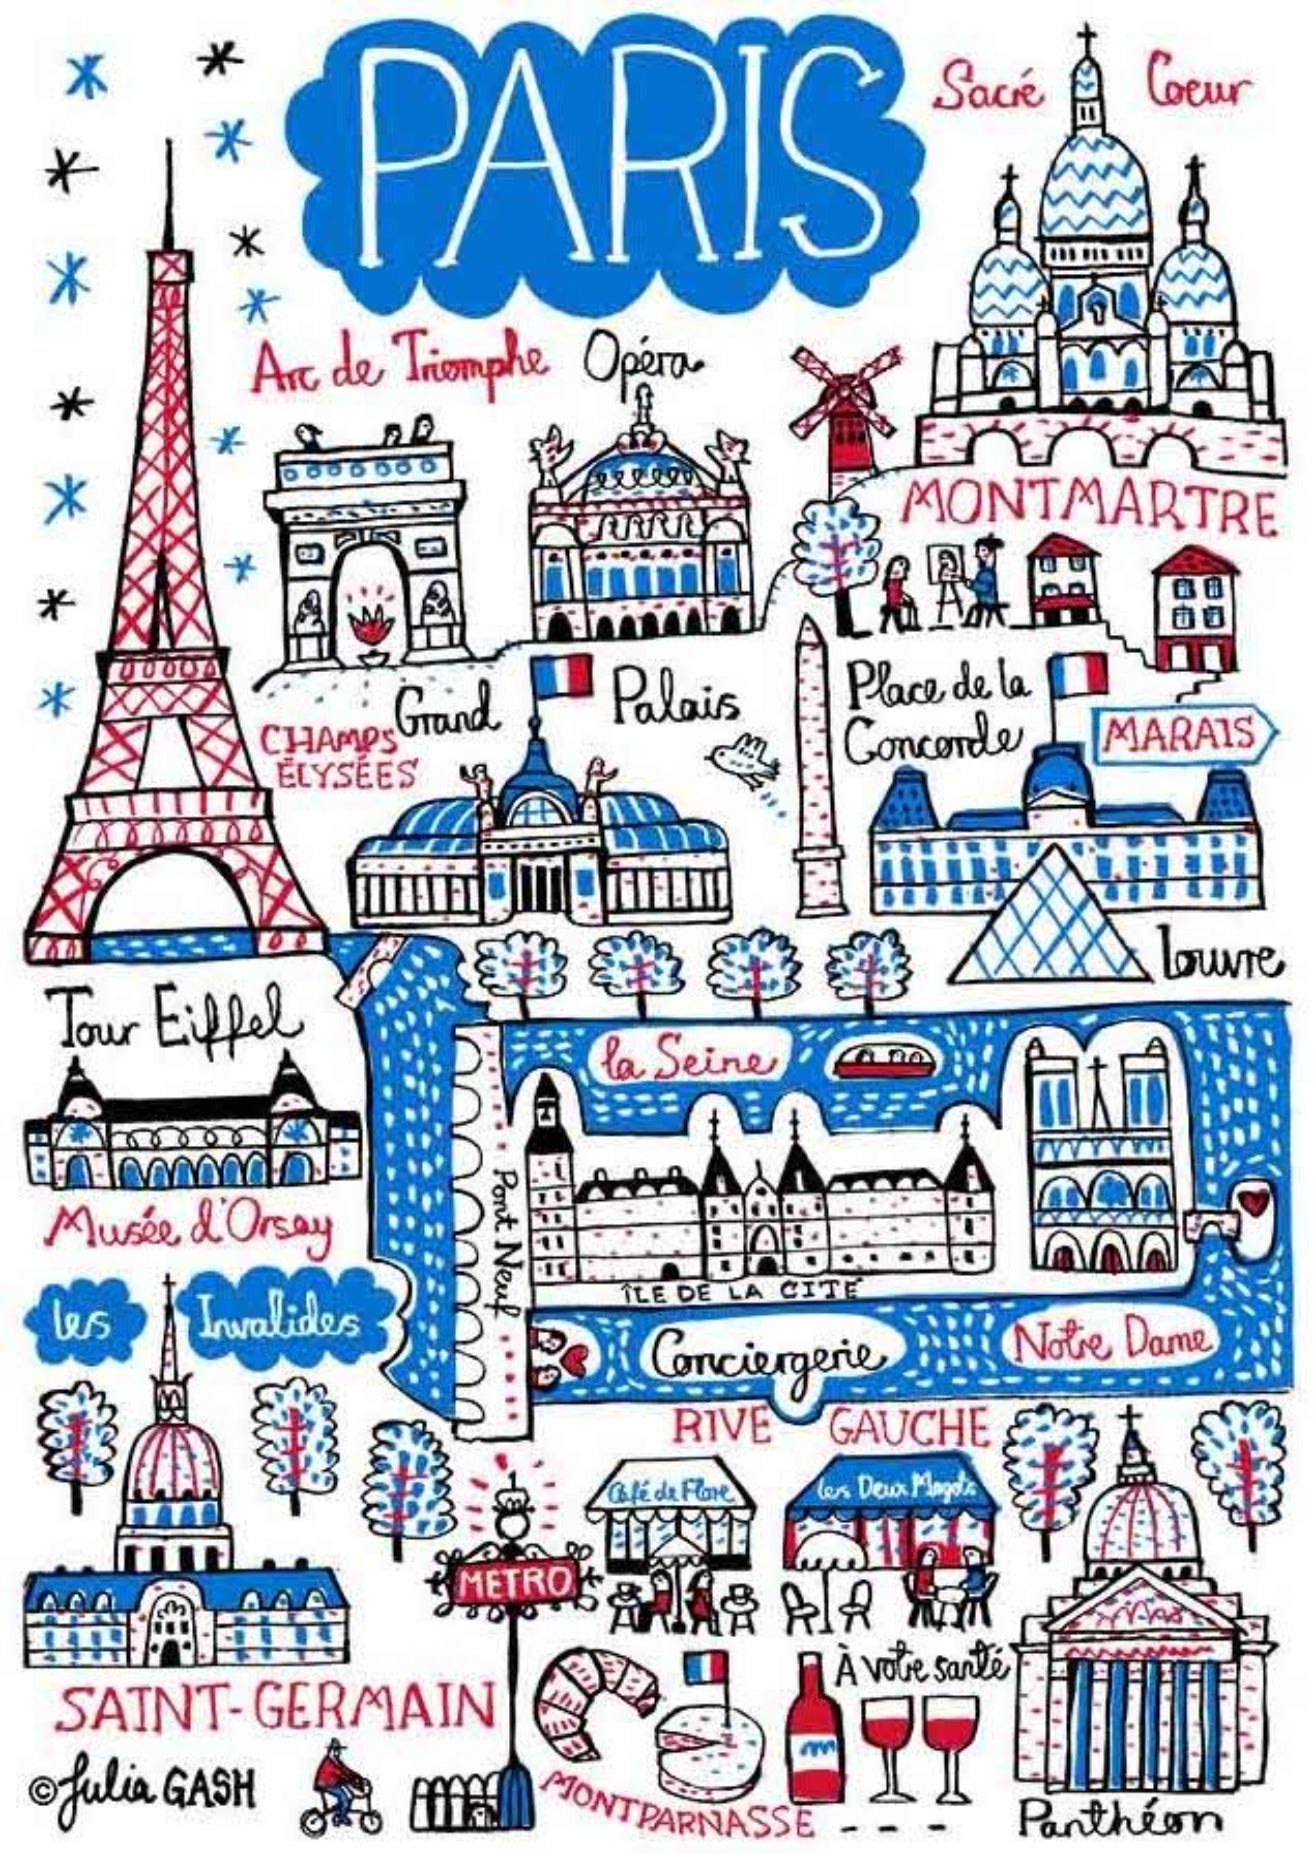 Paris France Illustrated Travel Art Print featuring the Eiffel Tower, Notre Dame, Montmartre by British travel artist Julia Gash